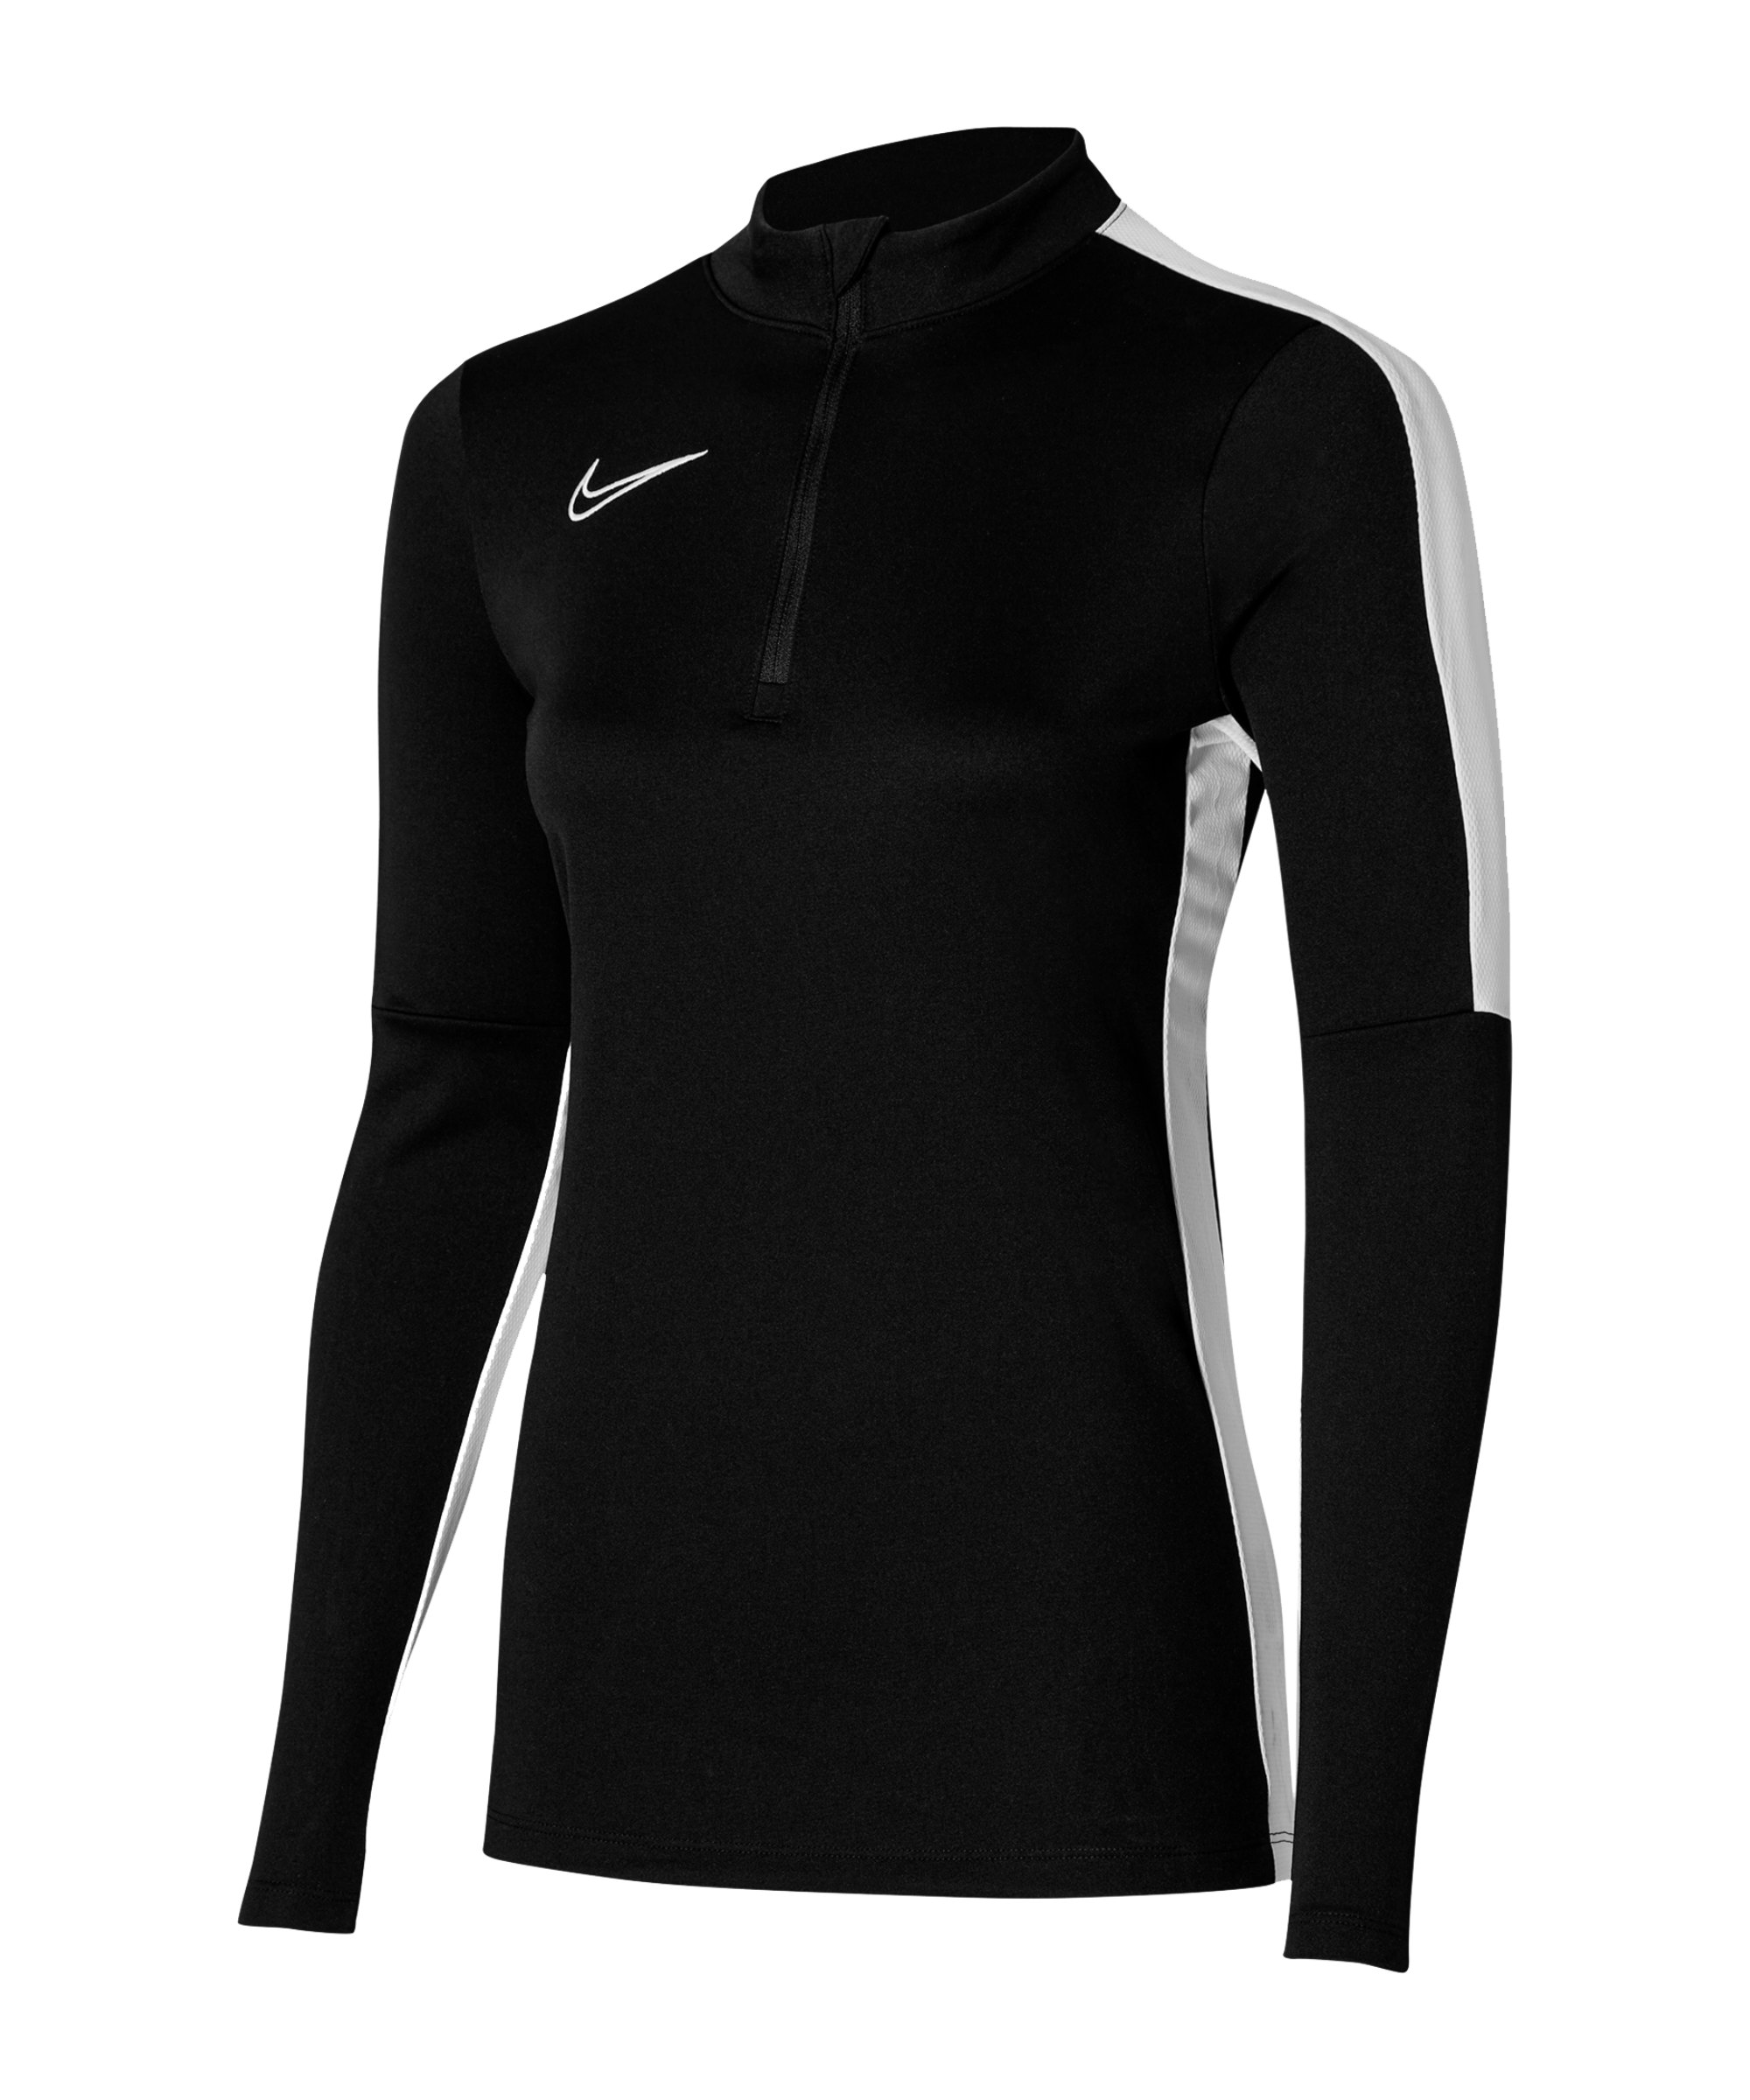 Nike Academy Drill Top Damen Schwarz F010 - schwarz